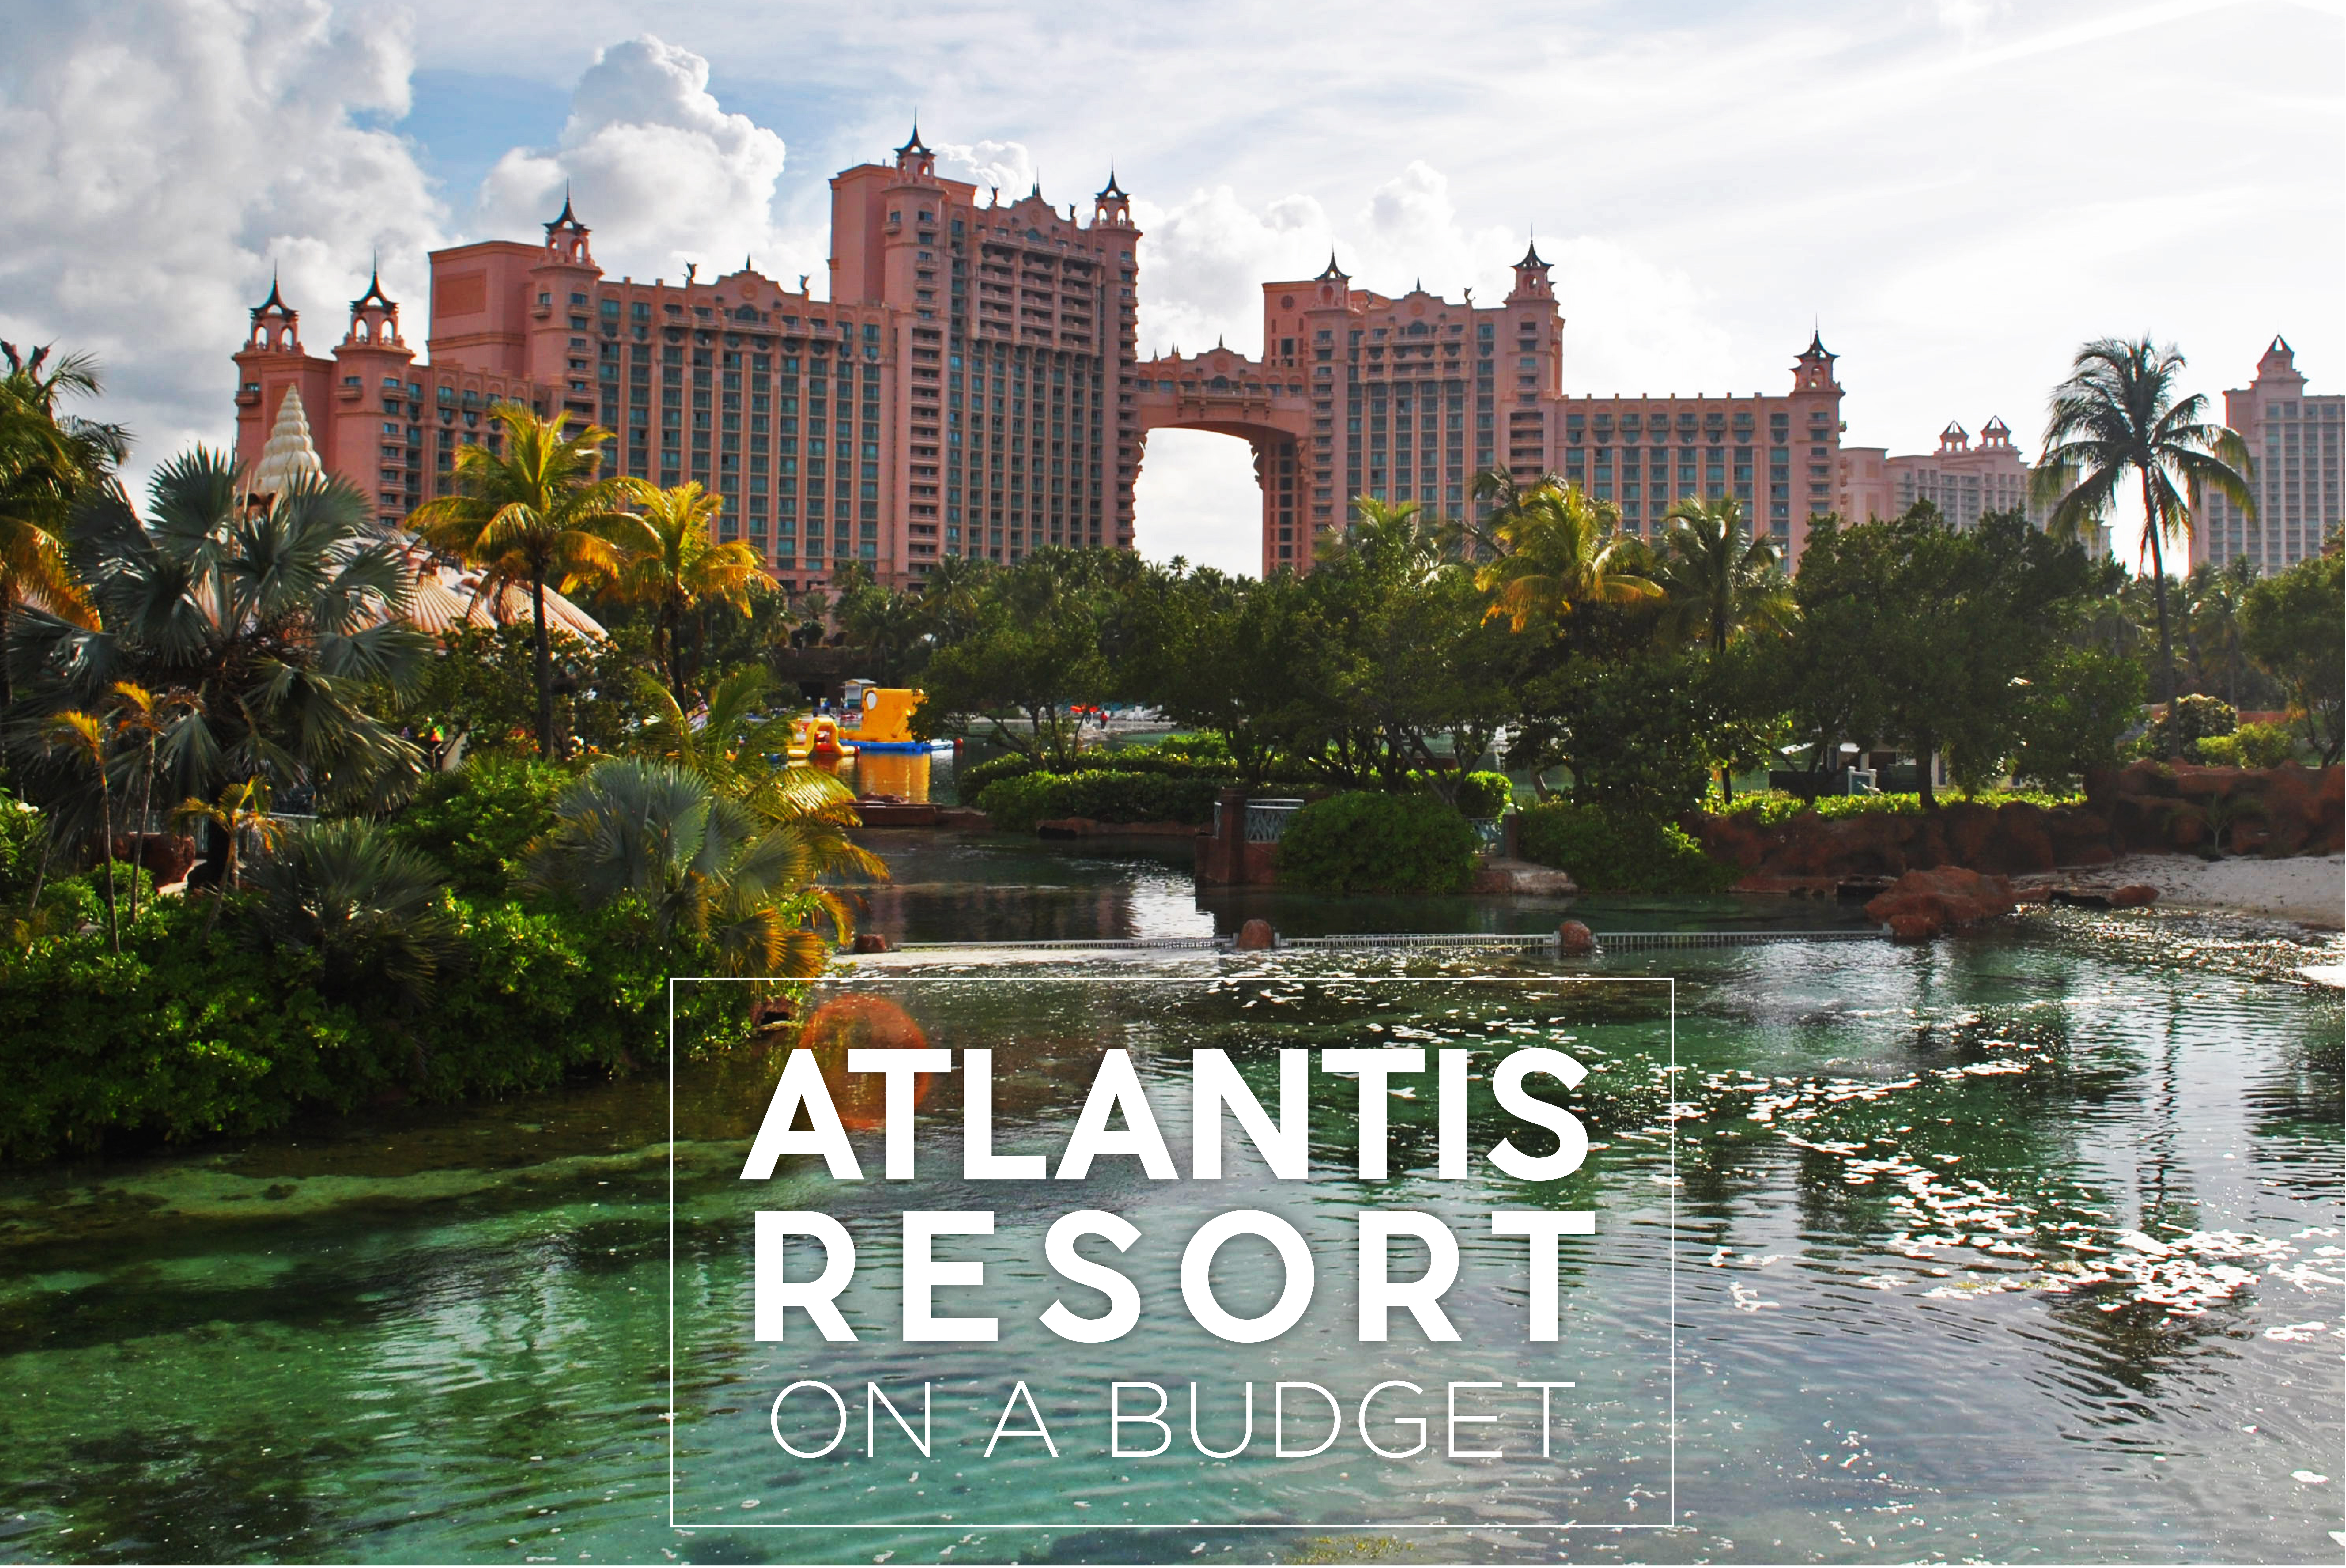 The Atlantis Resort on a Budget